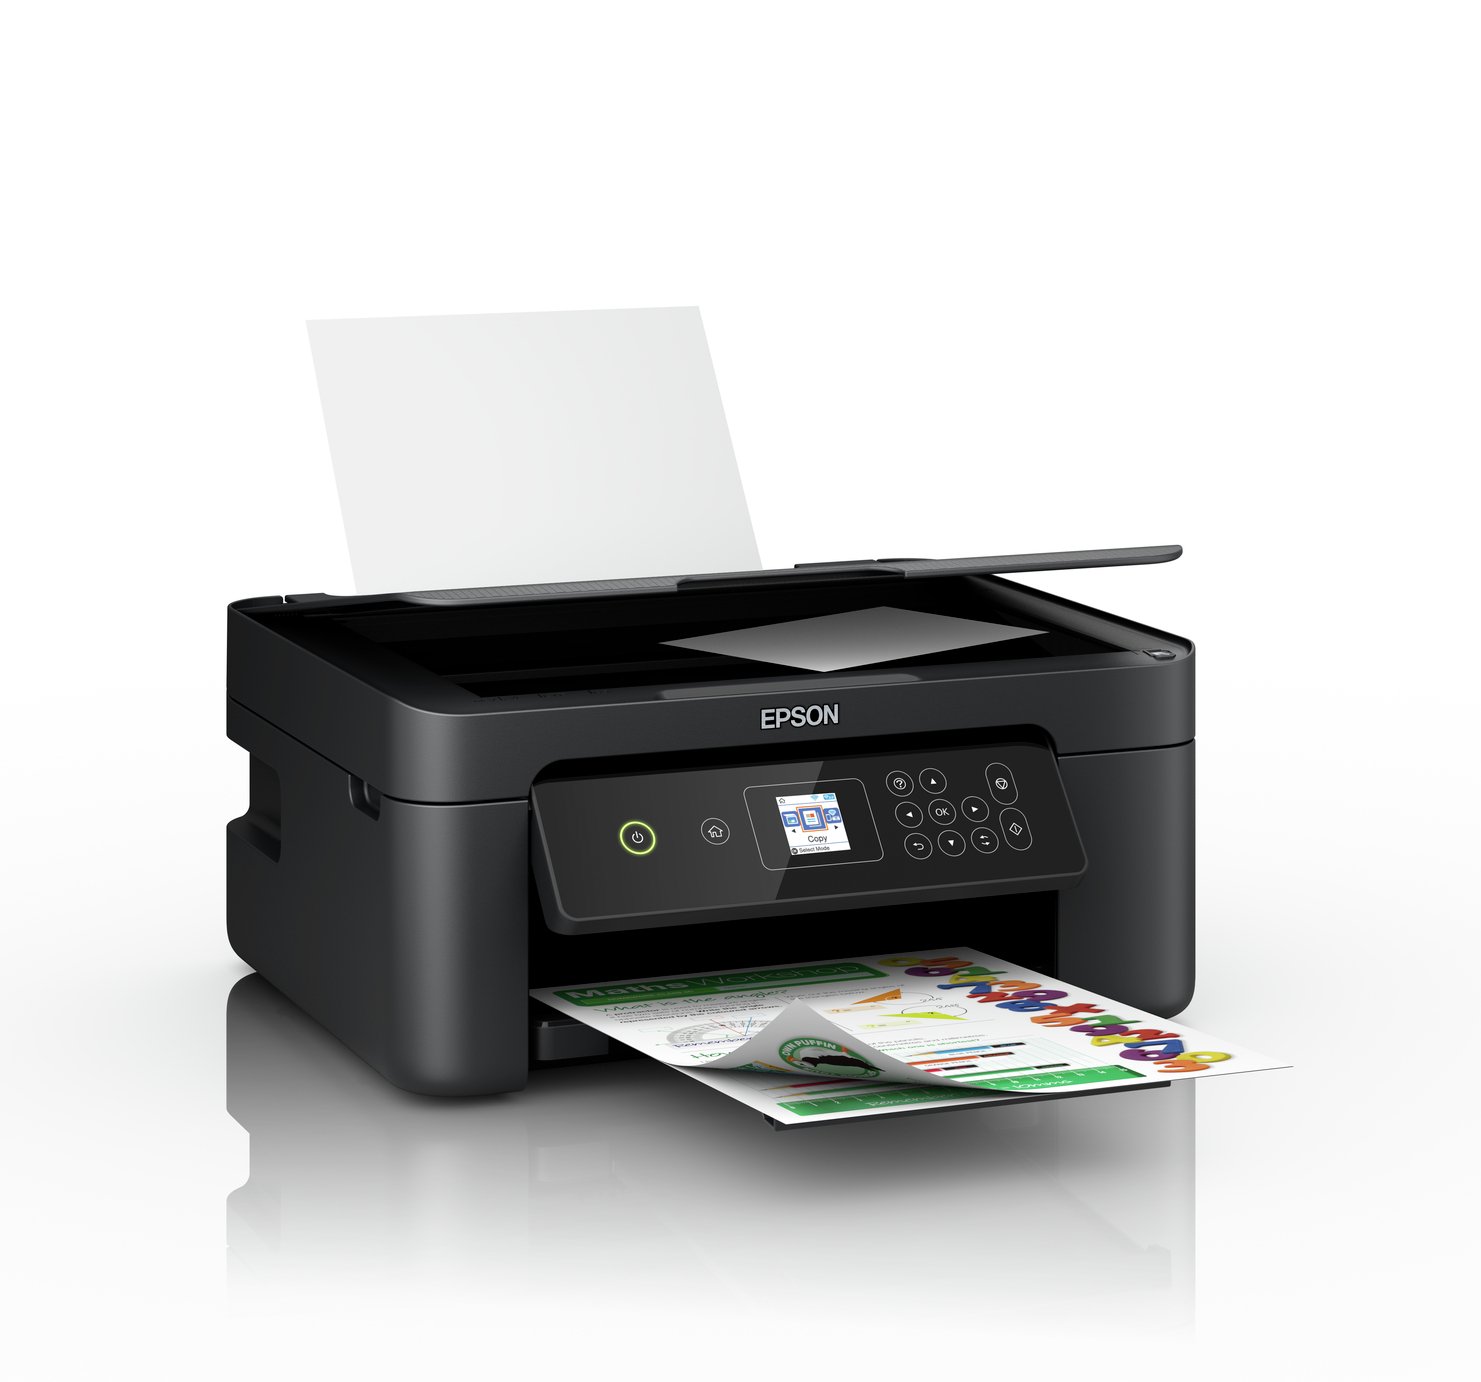 Epson Expression Home XP-3100 Wireless Inkjet Printer Review